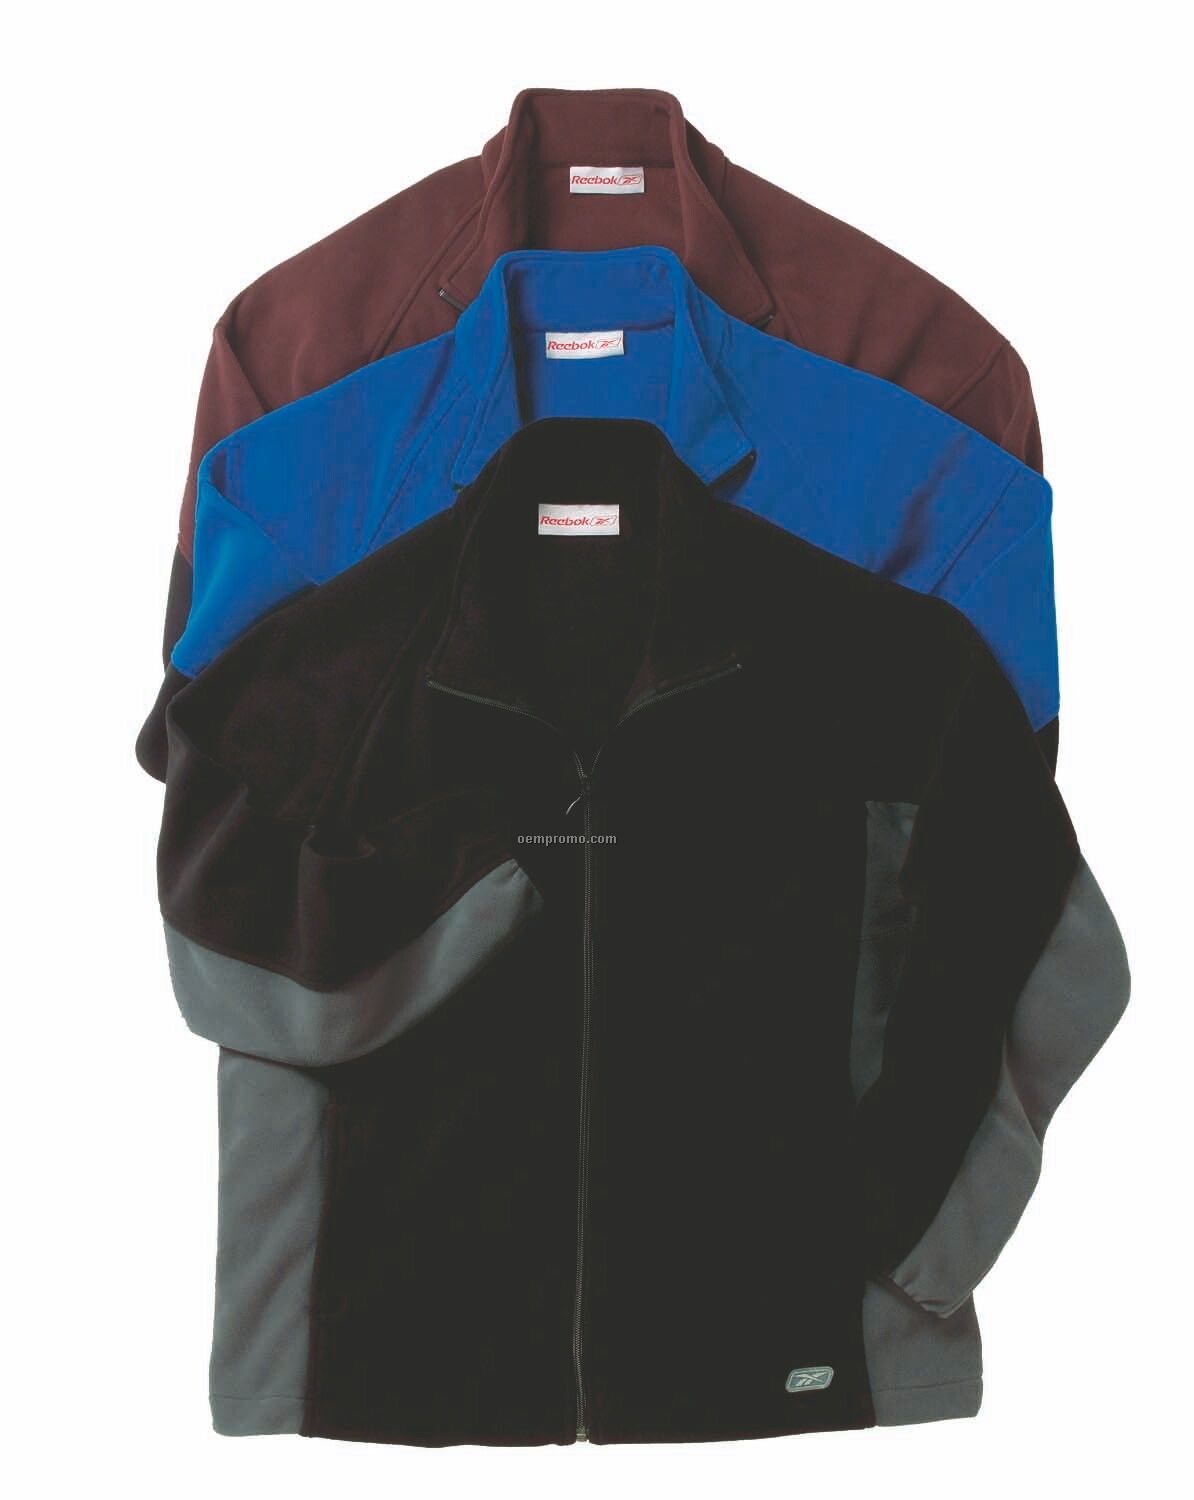 Reebok Full Zip Micro Fleece Jacket